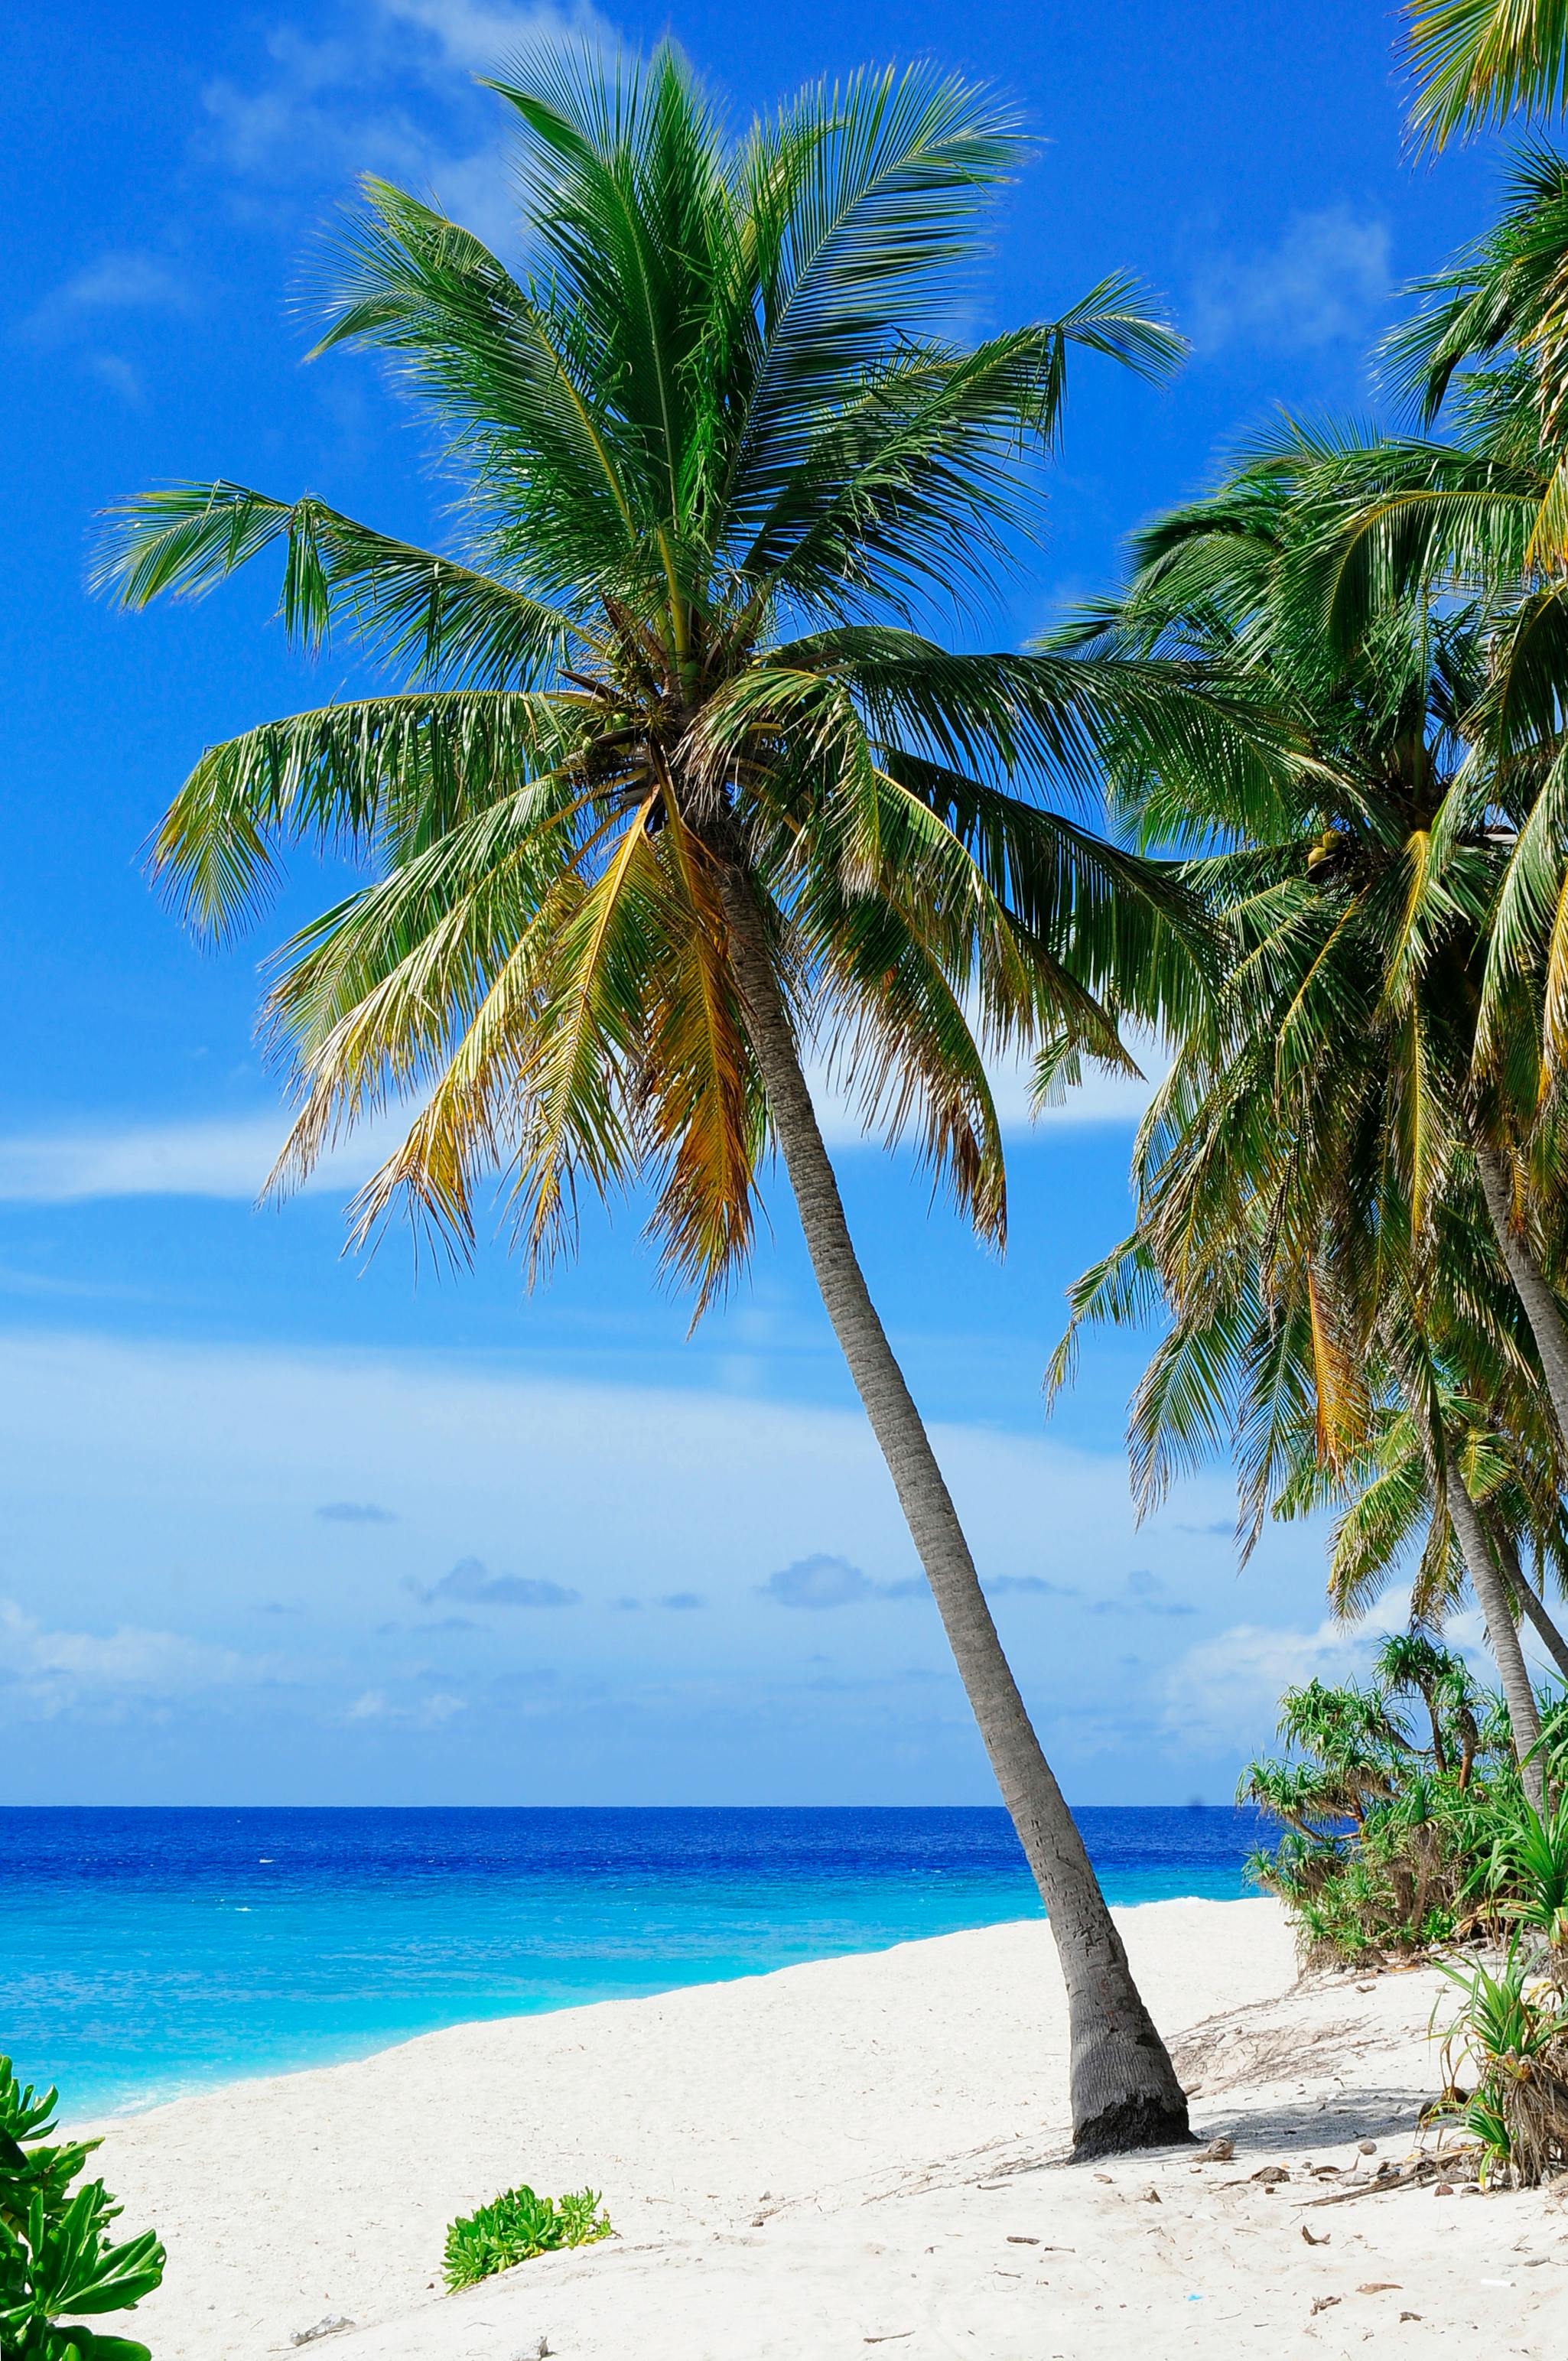 Best Free Tropical beach Stock Photos ☀ ...